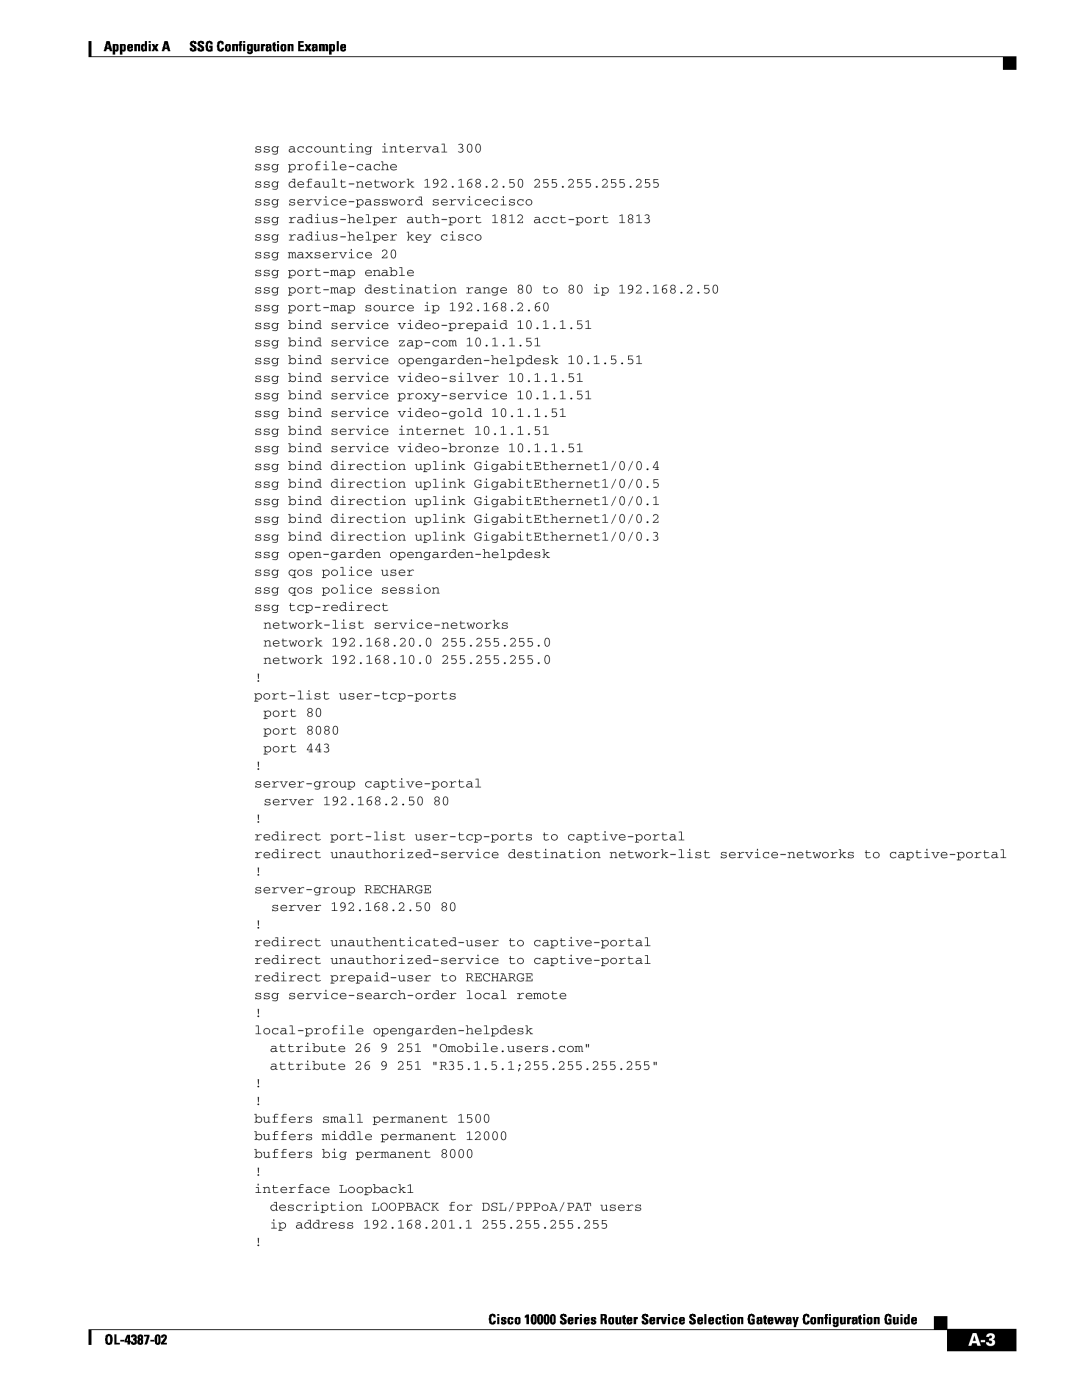 Cisco Systems OL-4387-02 manual Appendix A SSG Configuration Example 